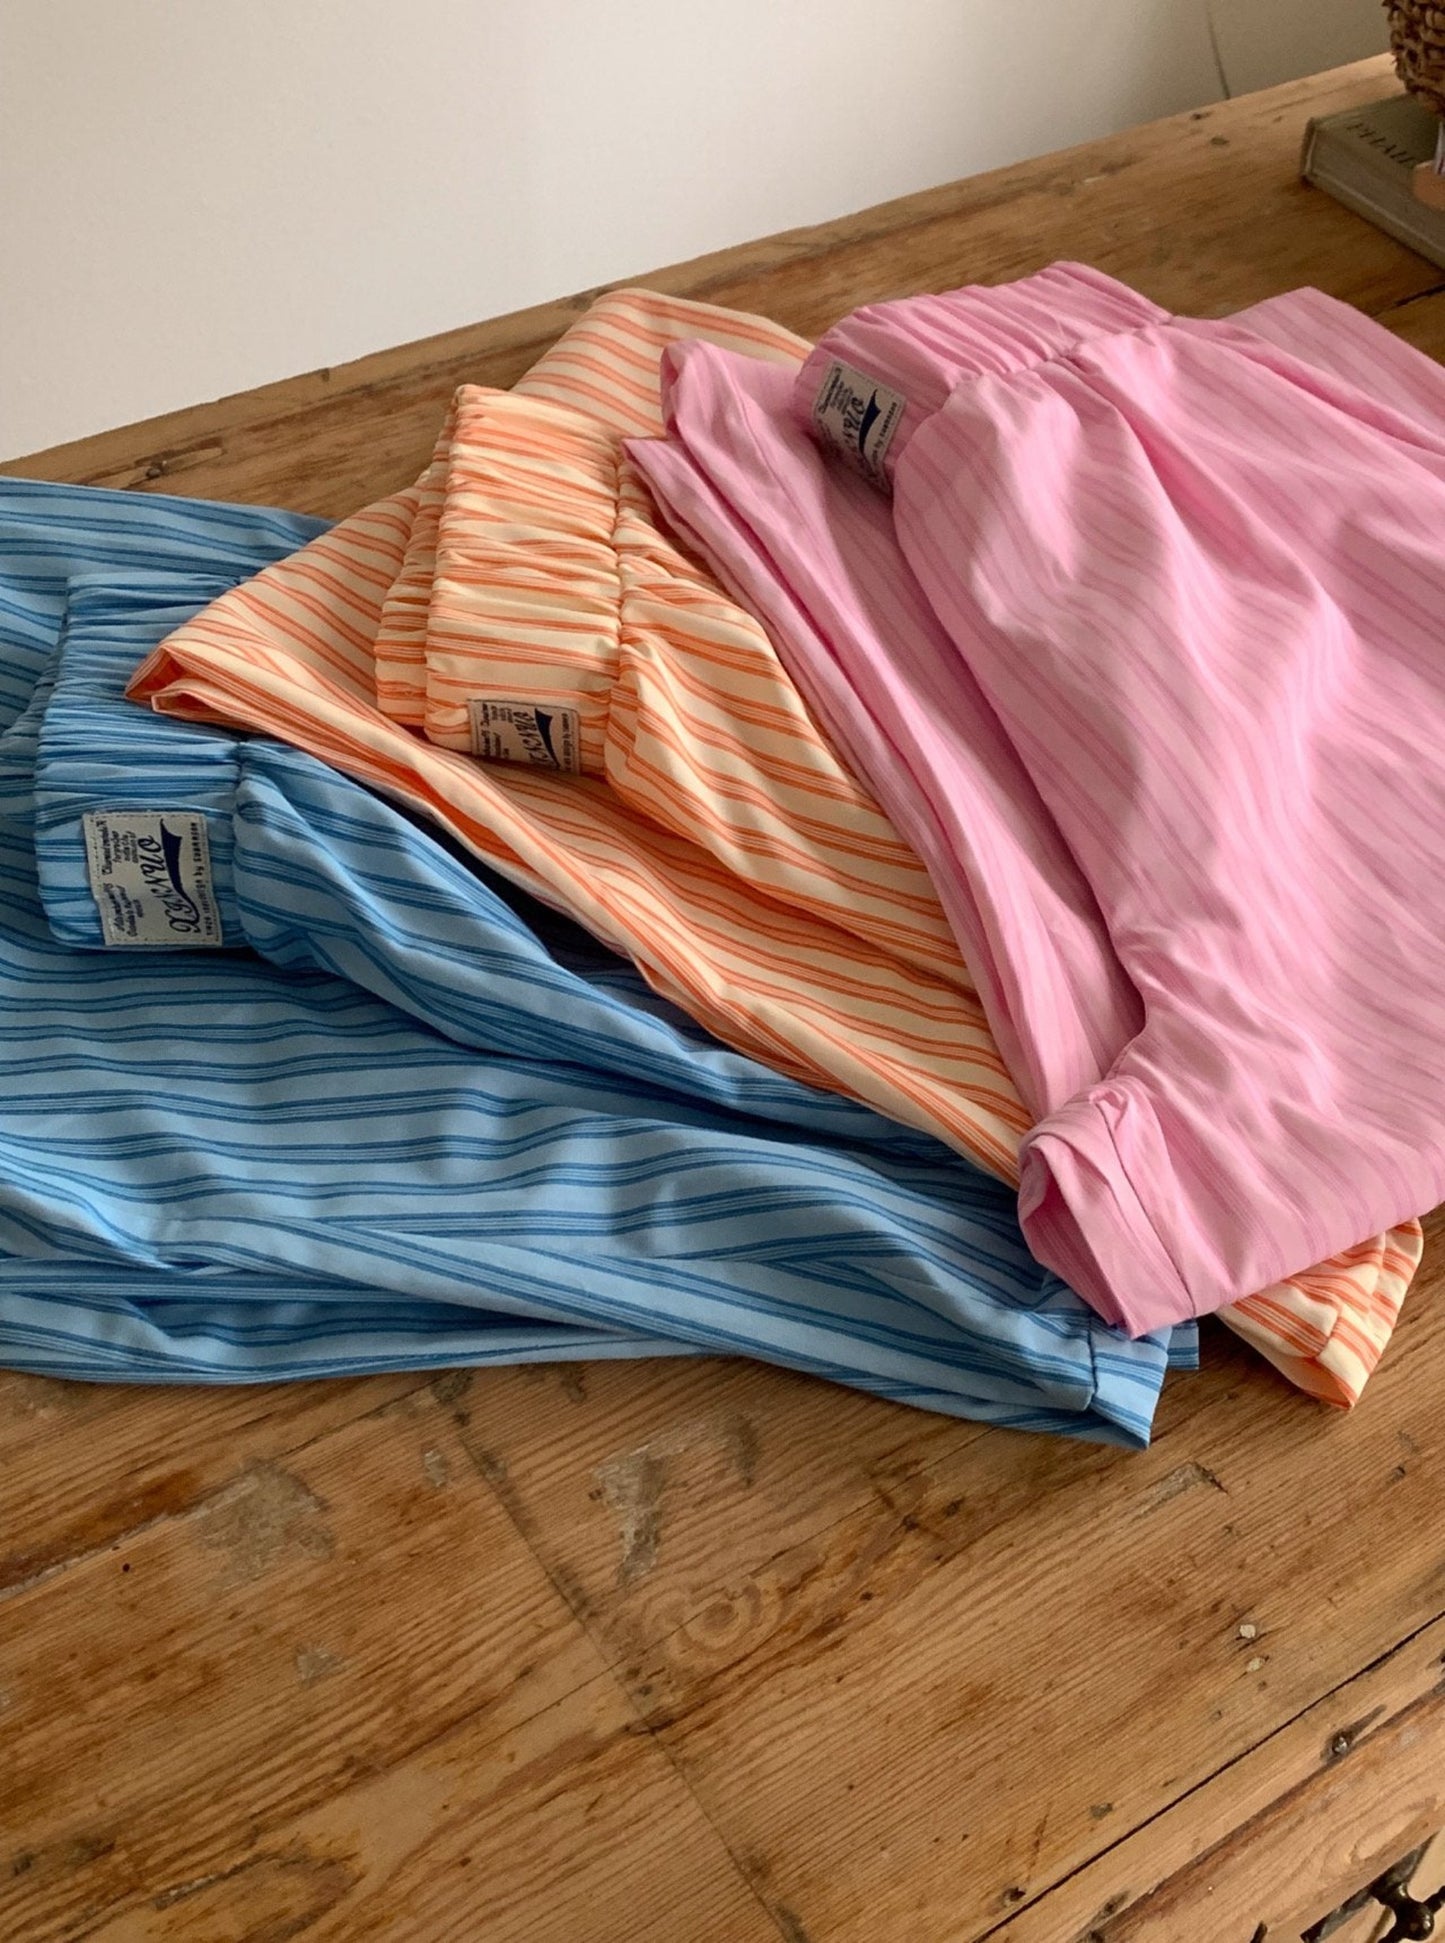 Stripe Pajama Set